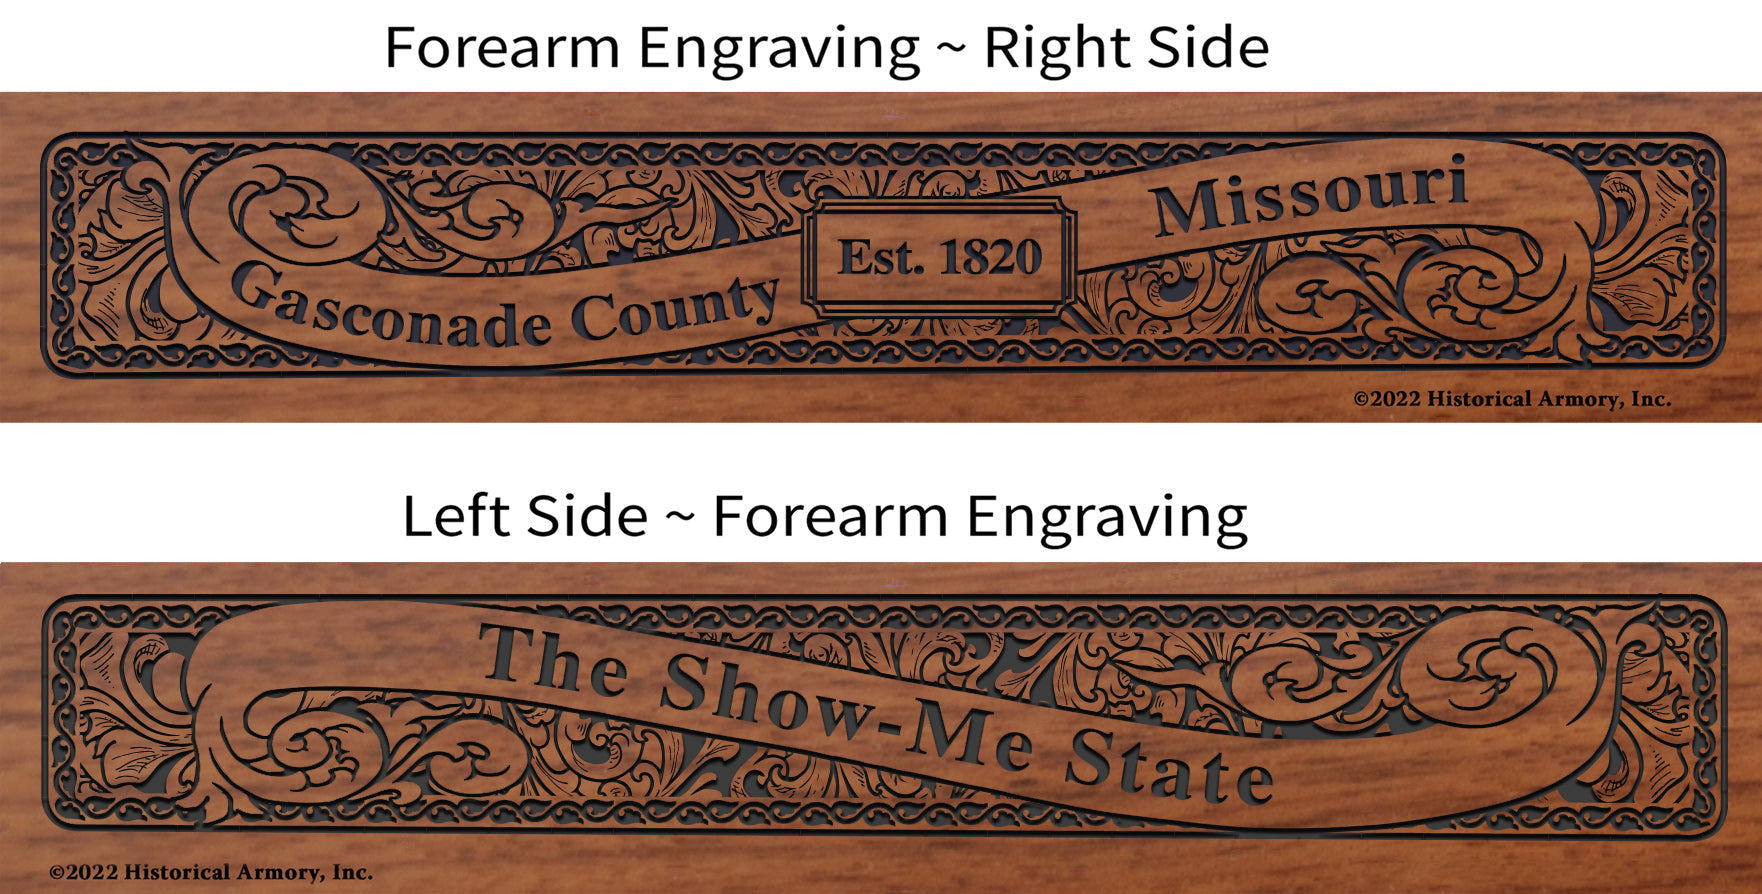 Gasconade County Missouri Engraved Rifle Forearm